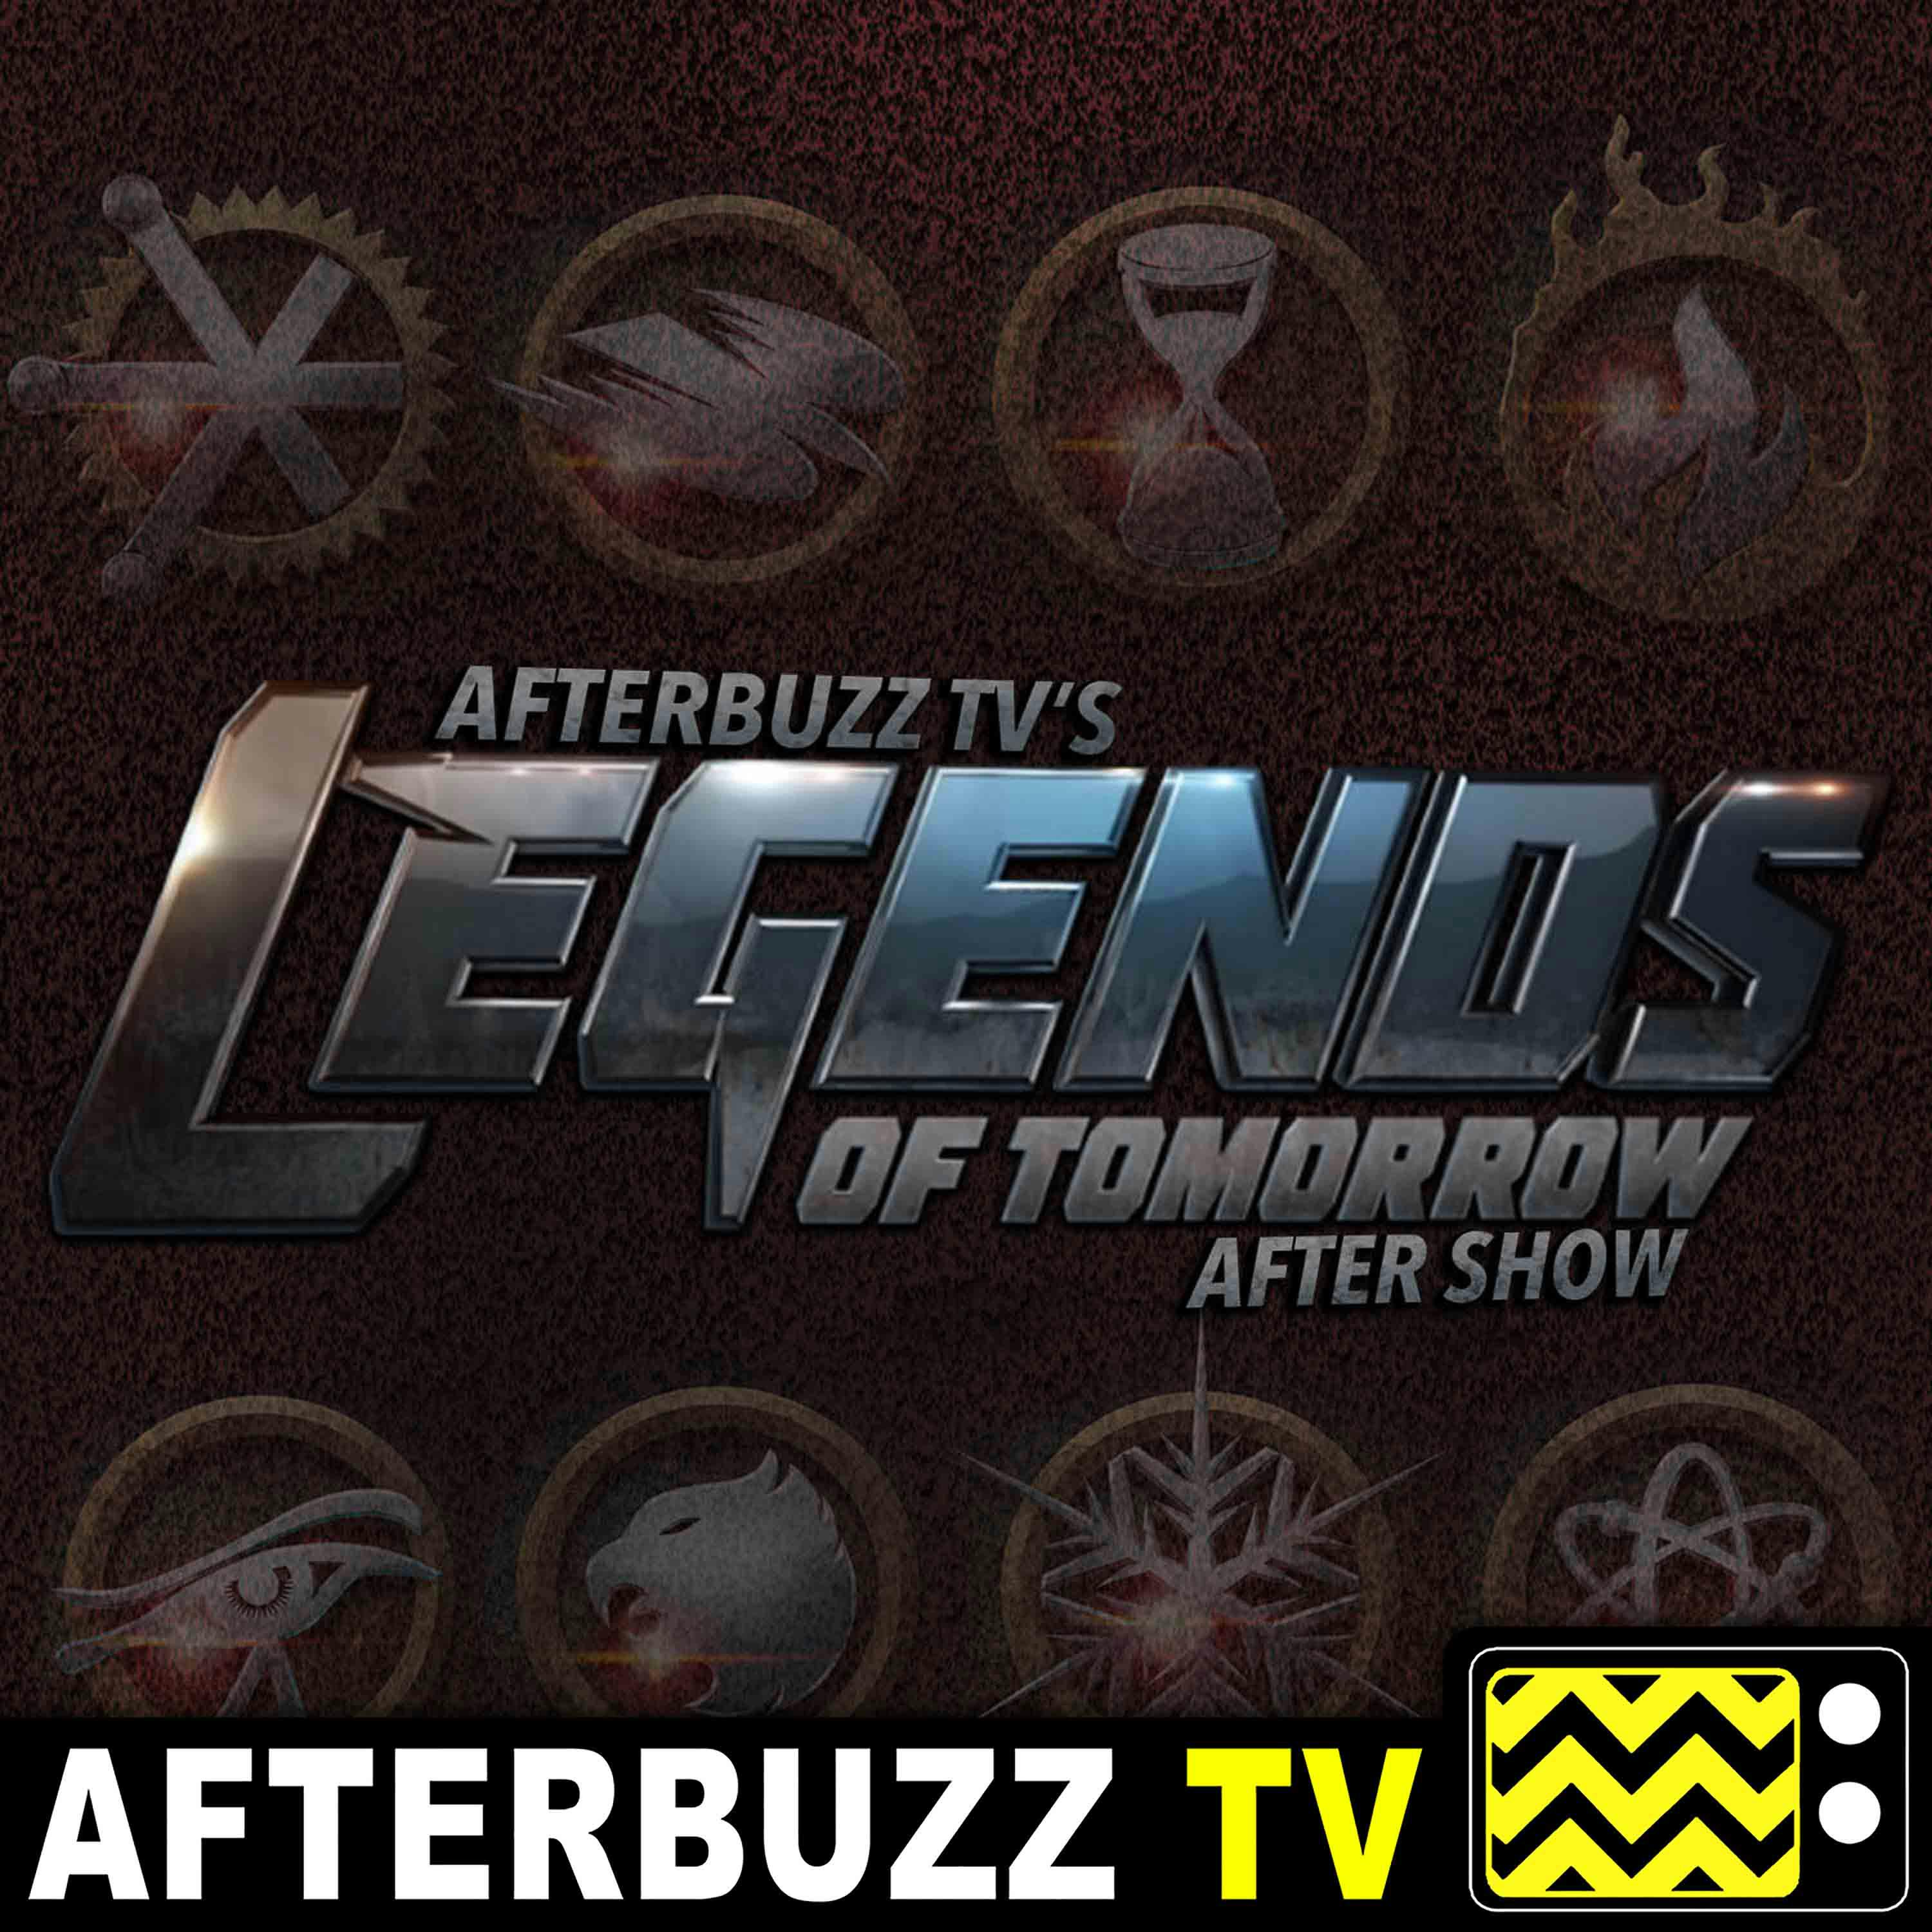 “Meet The legends” Season 5 Episode 2 ’Legends Of Tomorrow’ Recap & Review